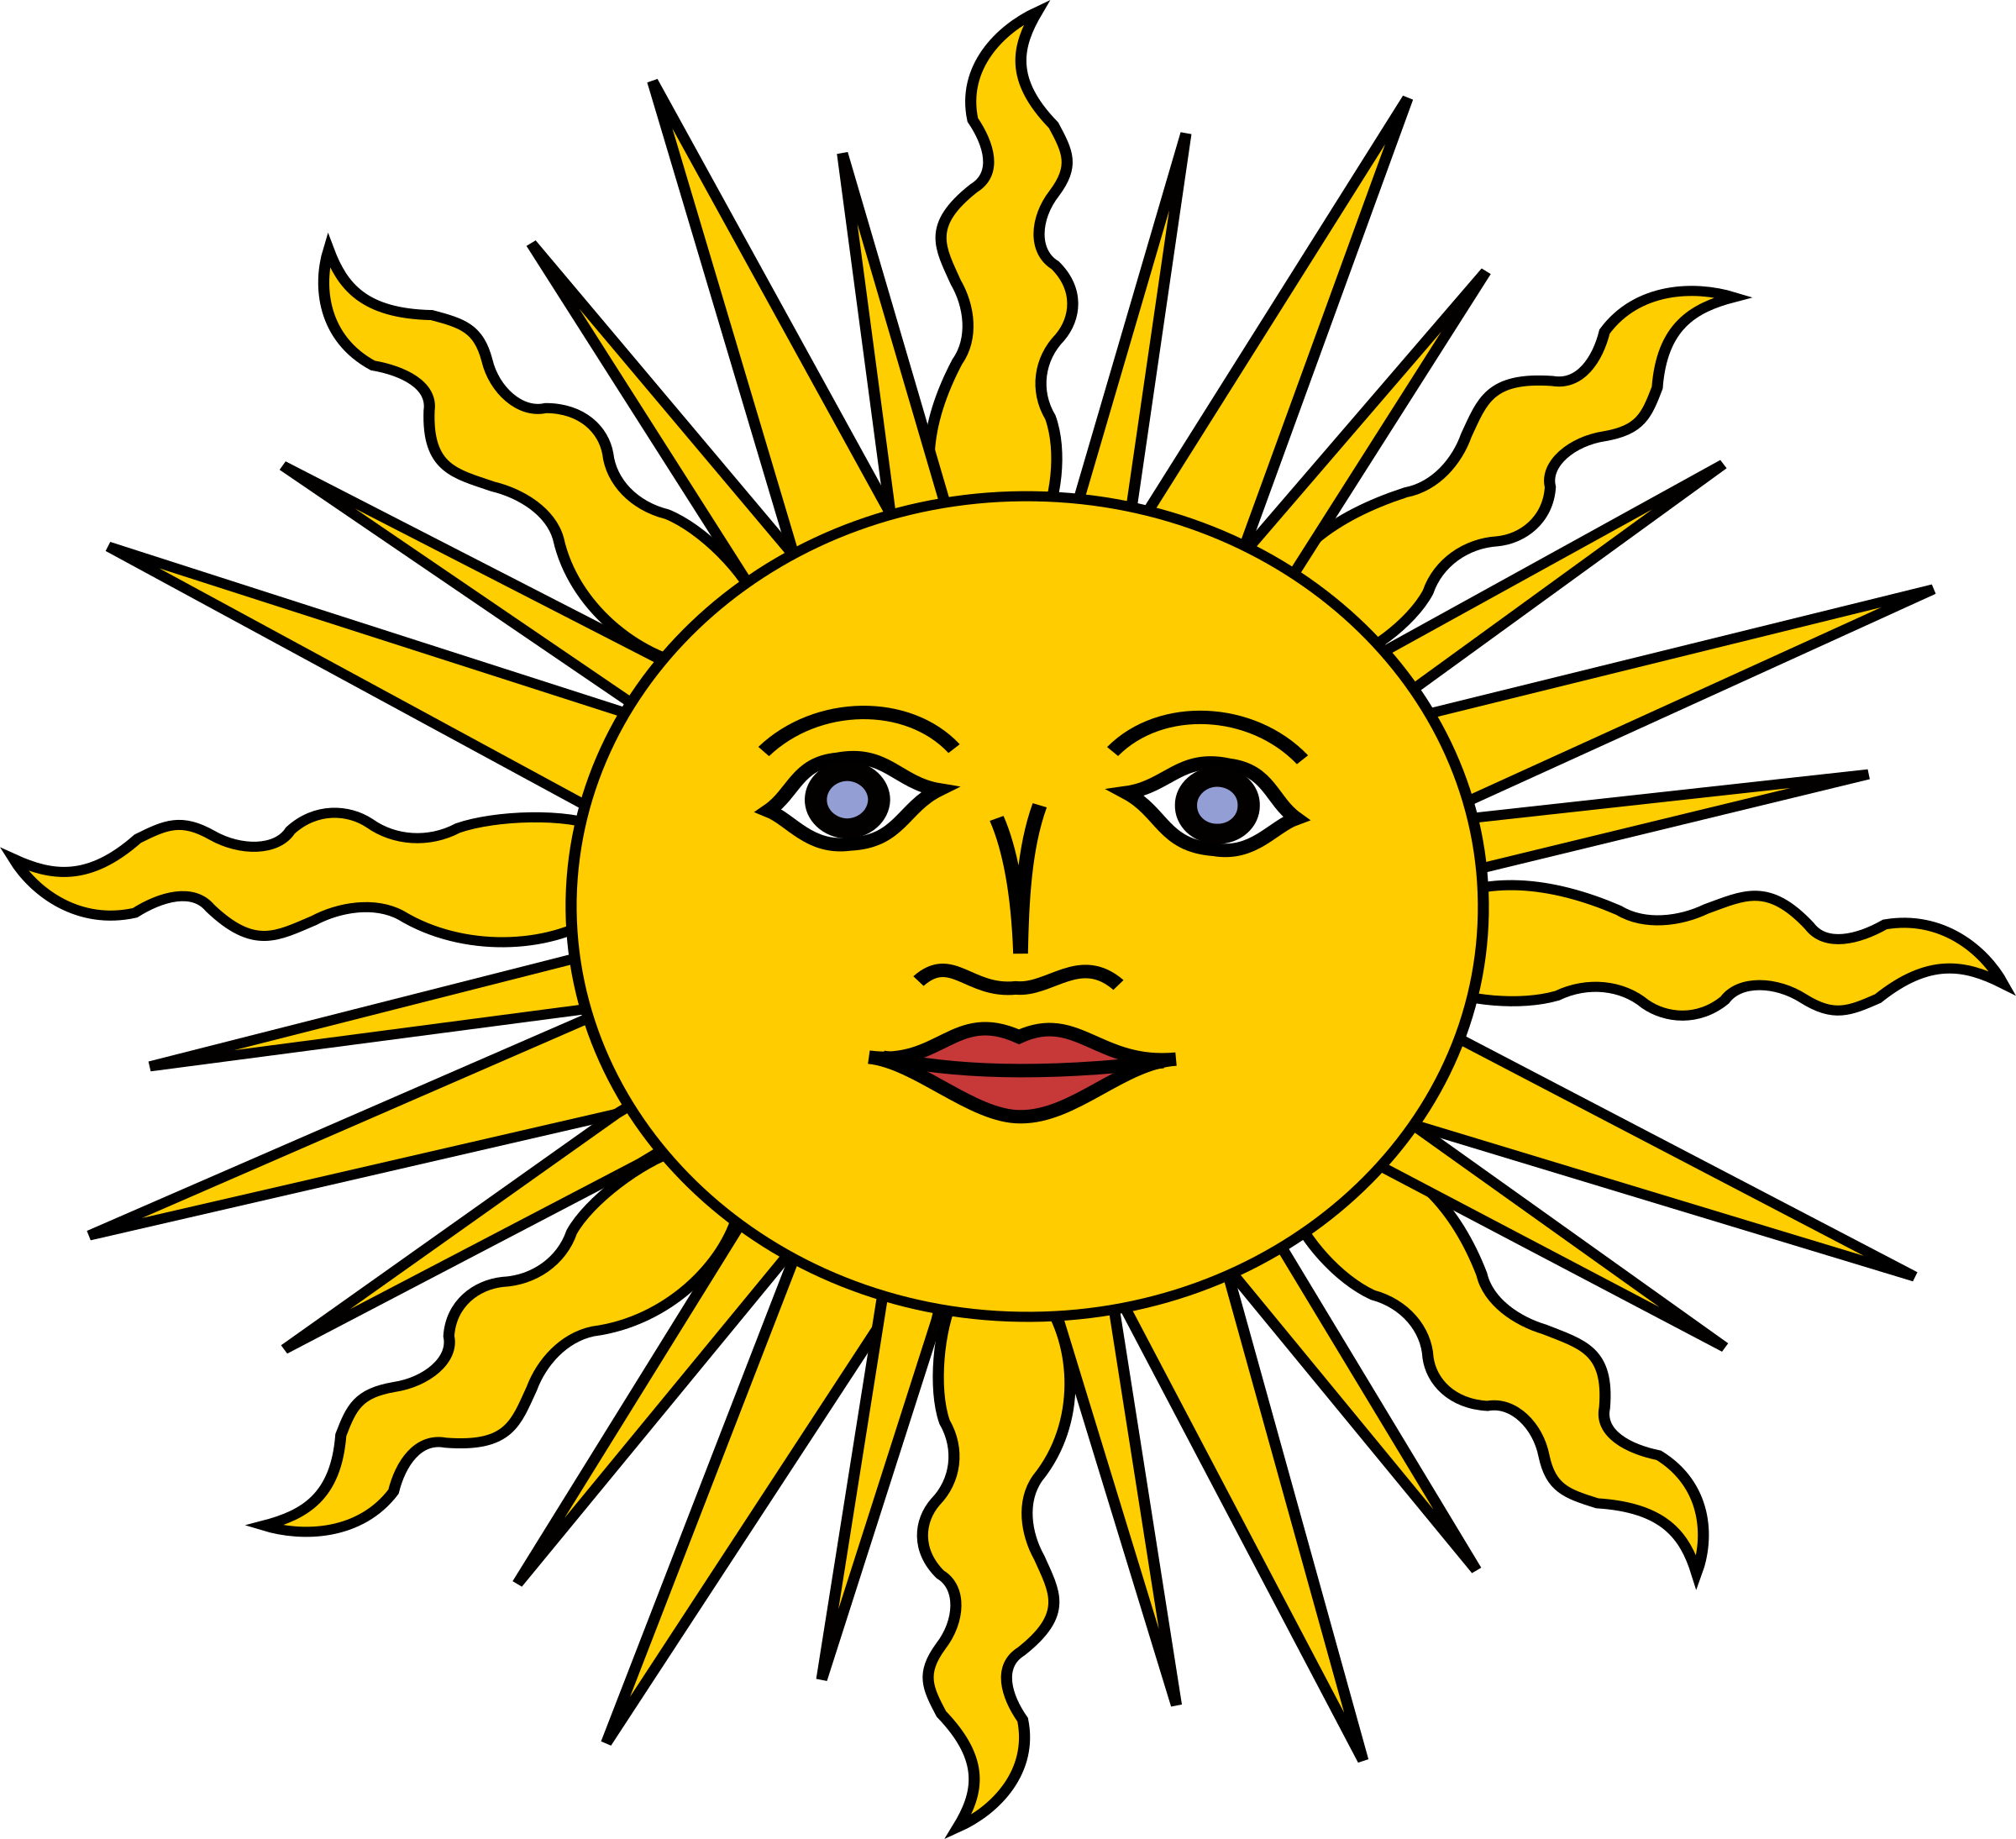 Солнце рисунок. Солнышко рисунок. Солнце нарисованное. Солнце риконок. Солнышко спой